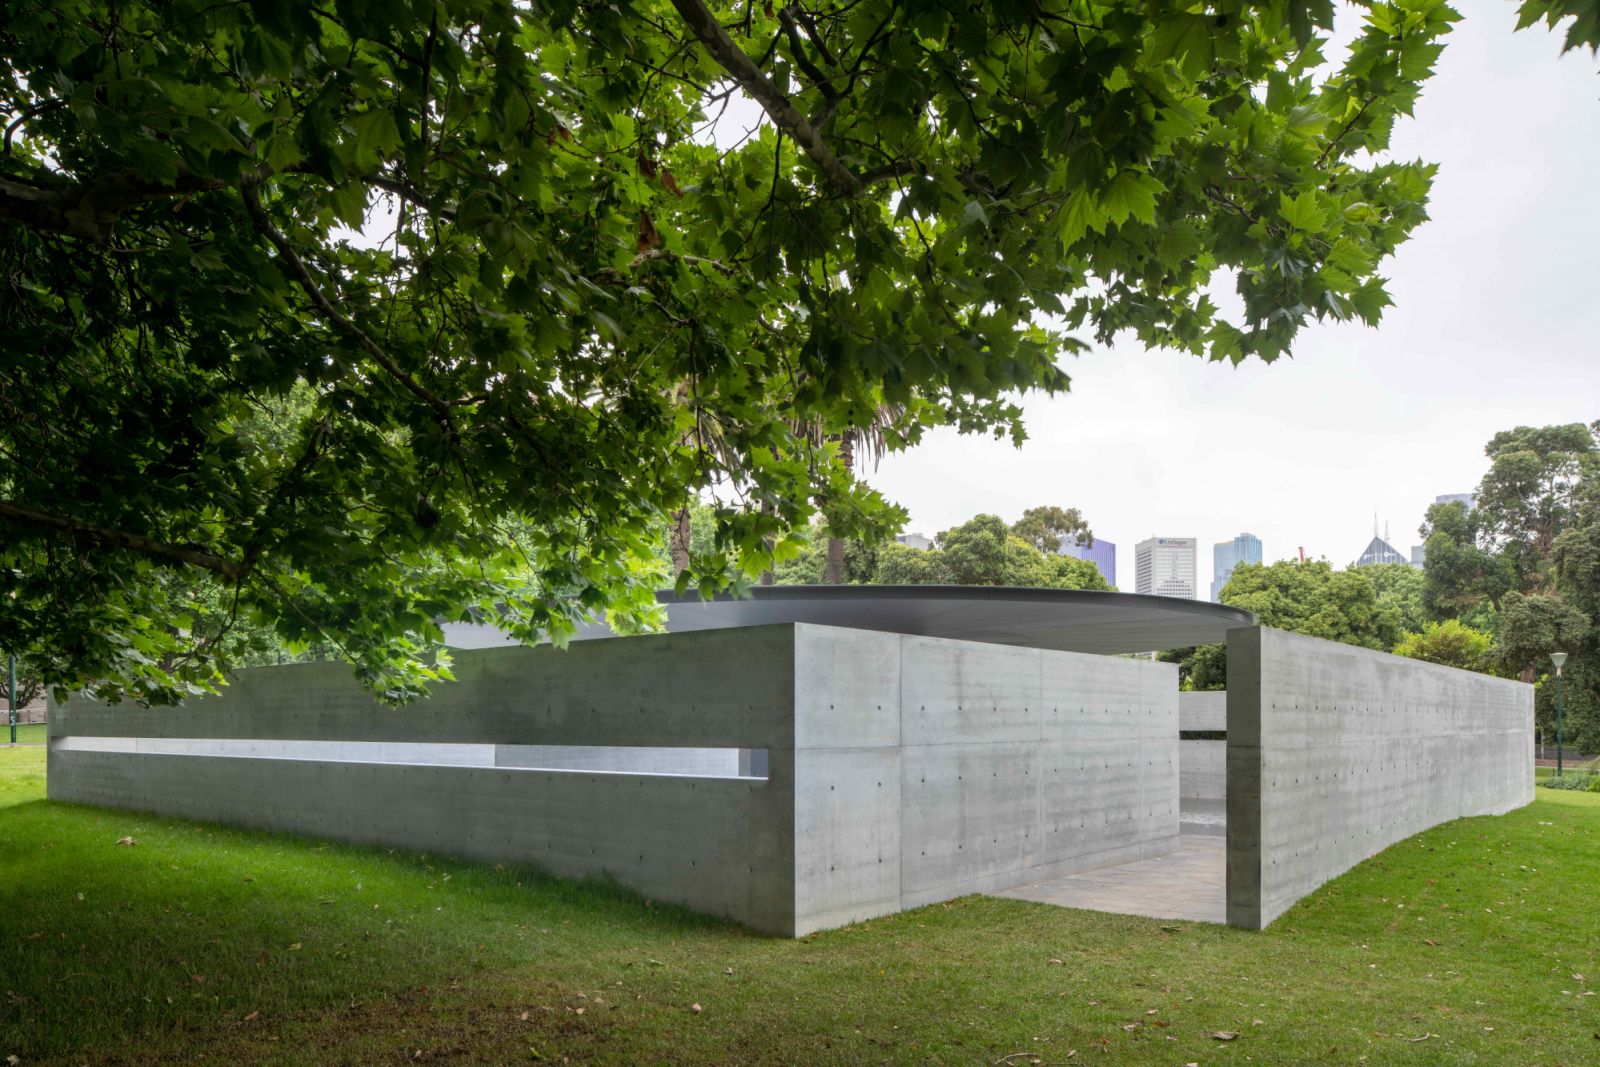 MPavilion 10, designed by Pritzer Prize winner and architect, Tadao Ando